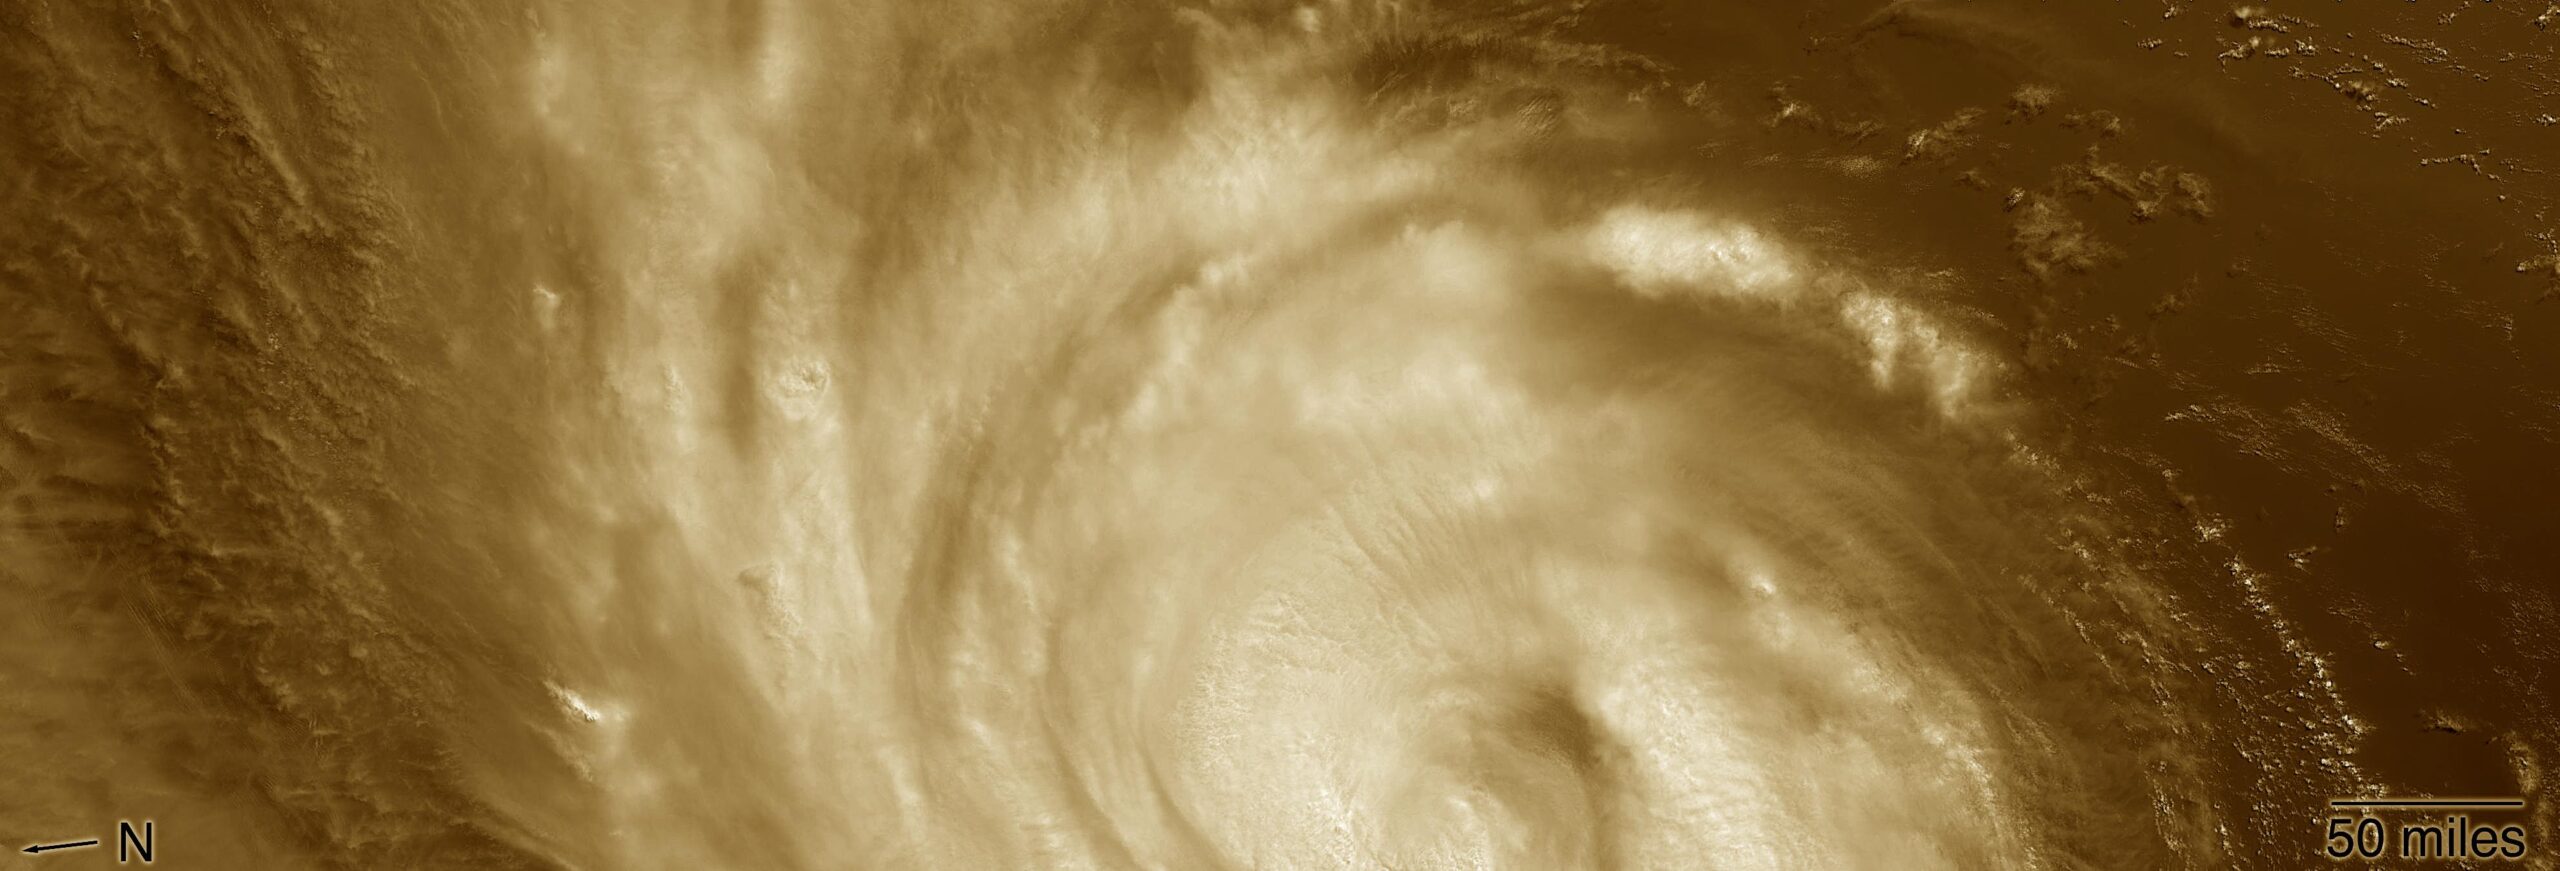 image: Hurricane Florence, satellite view.